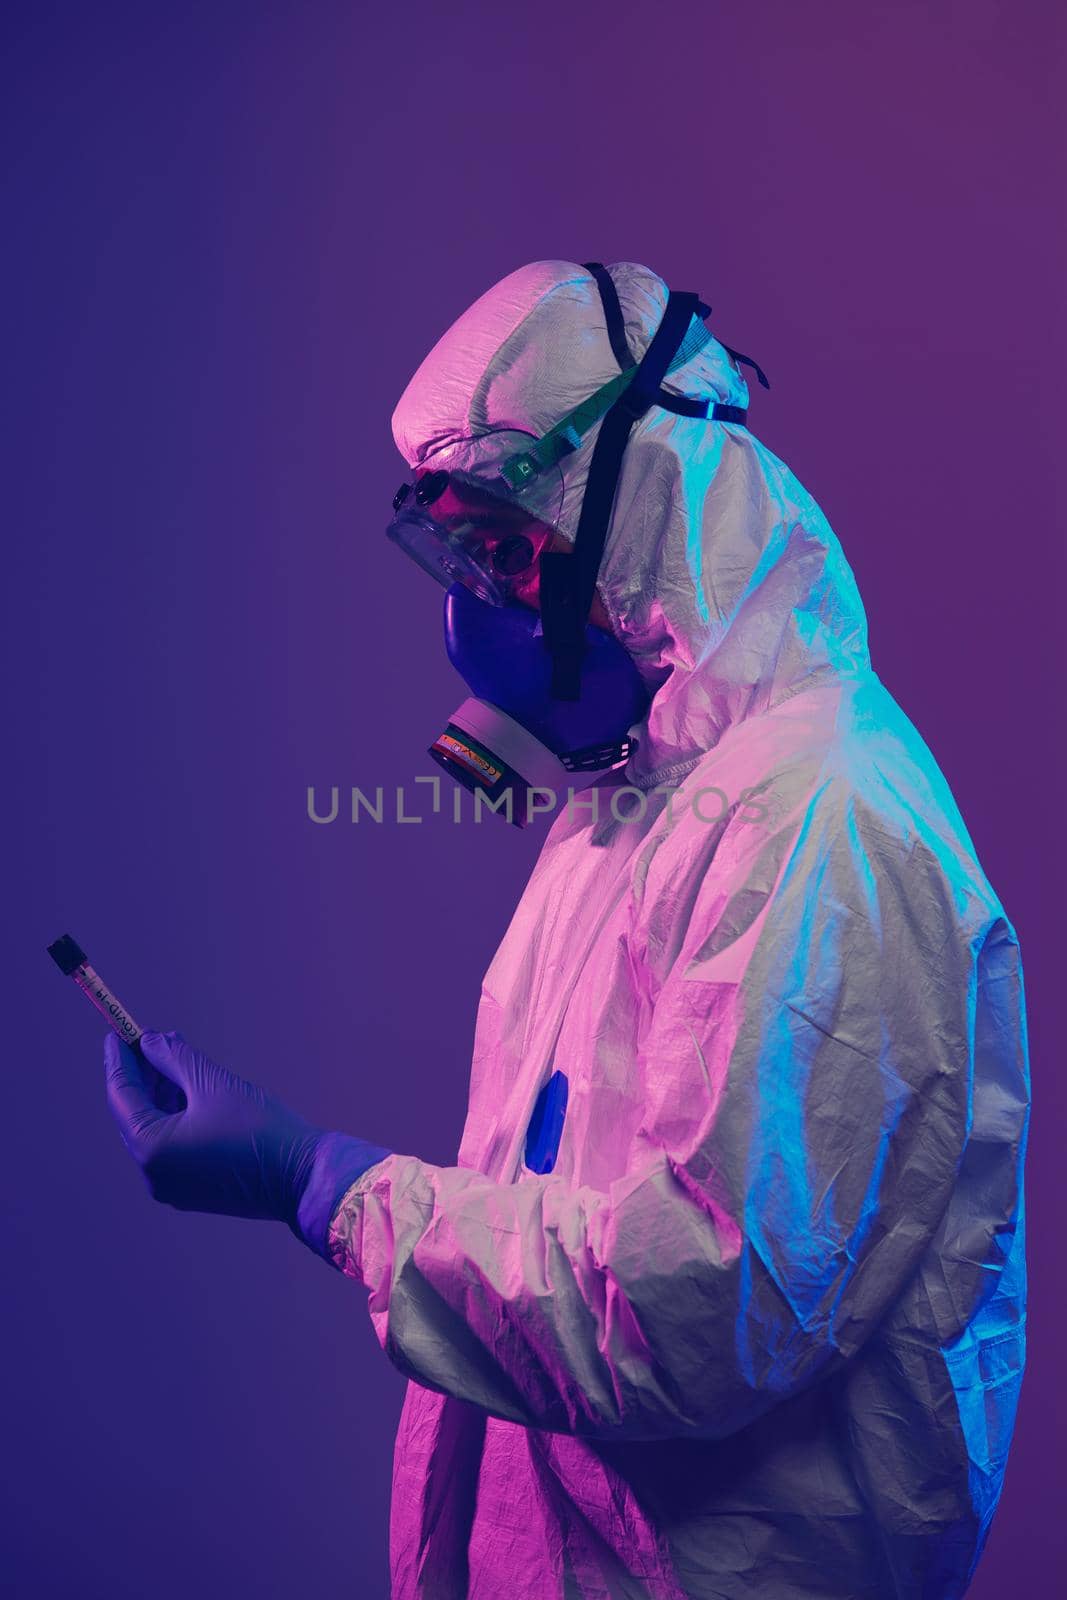 Coronavirus, Doctor holding positive covid-19 virus Blood Sample test tube. Wearing biohazard epidemic Protective mask, suit and glows neon light background